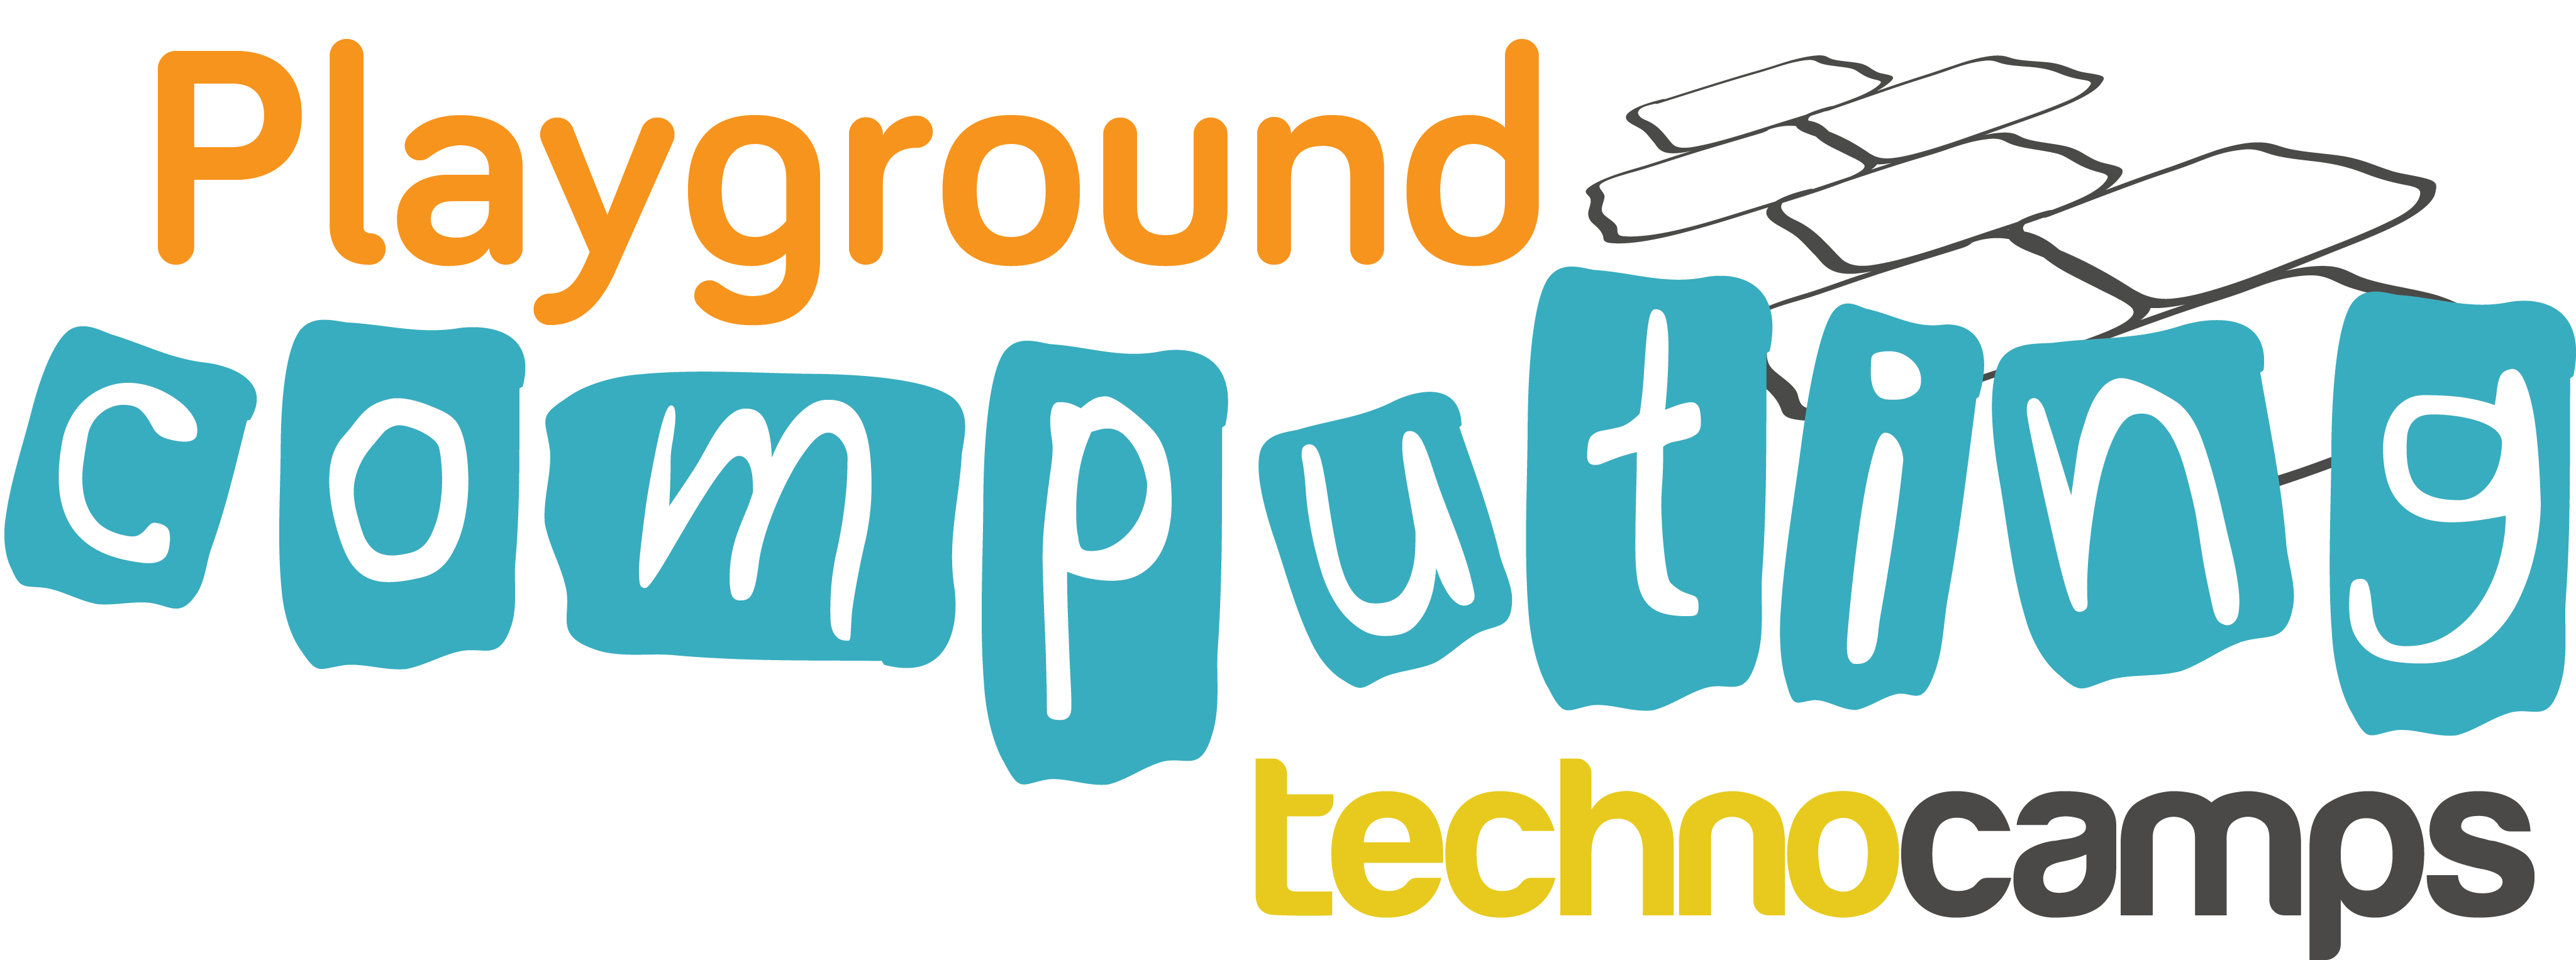 Playground Computing logo